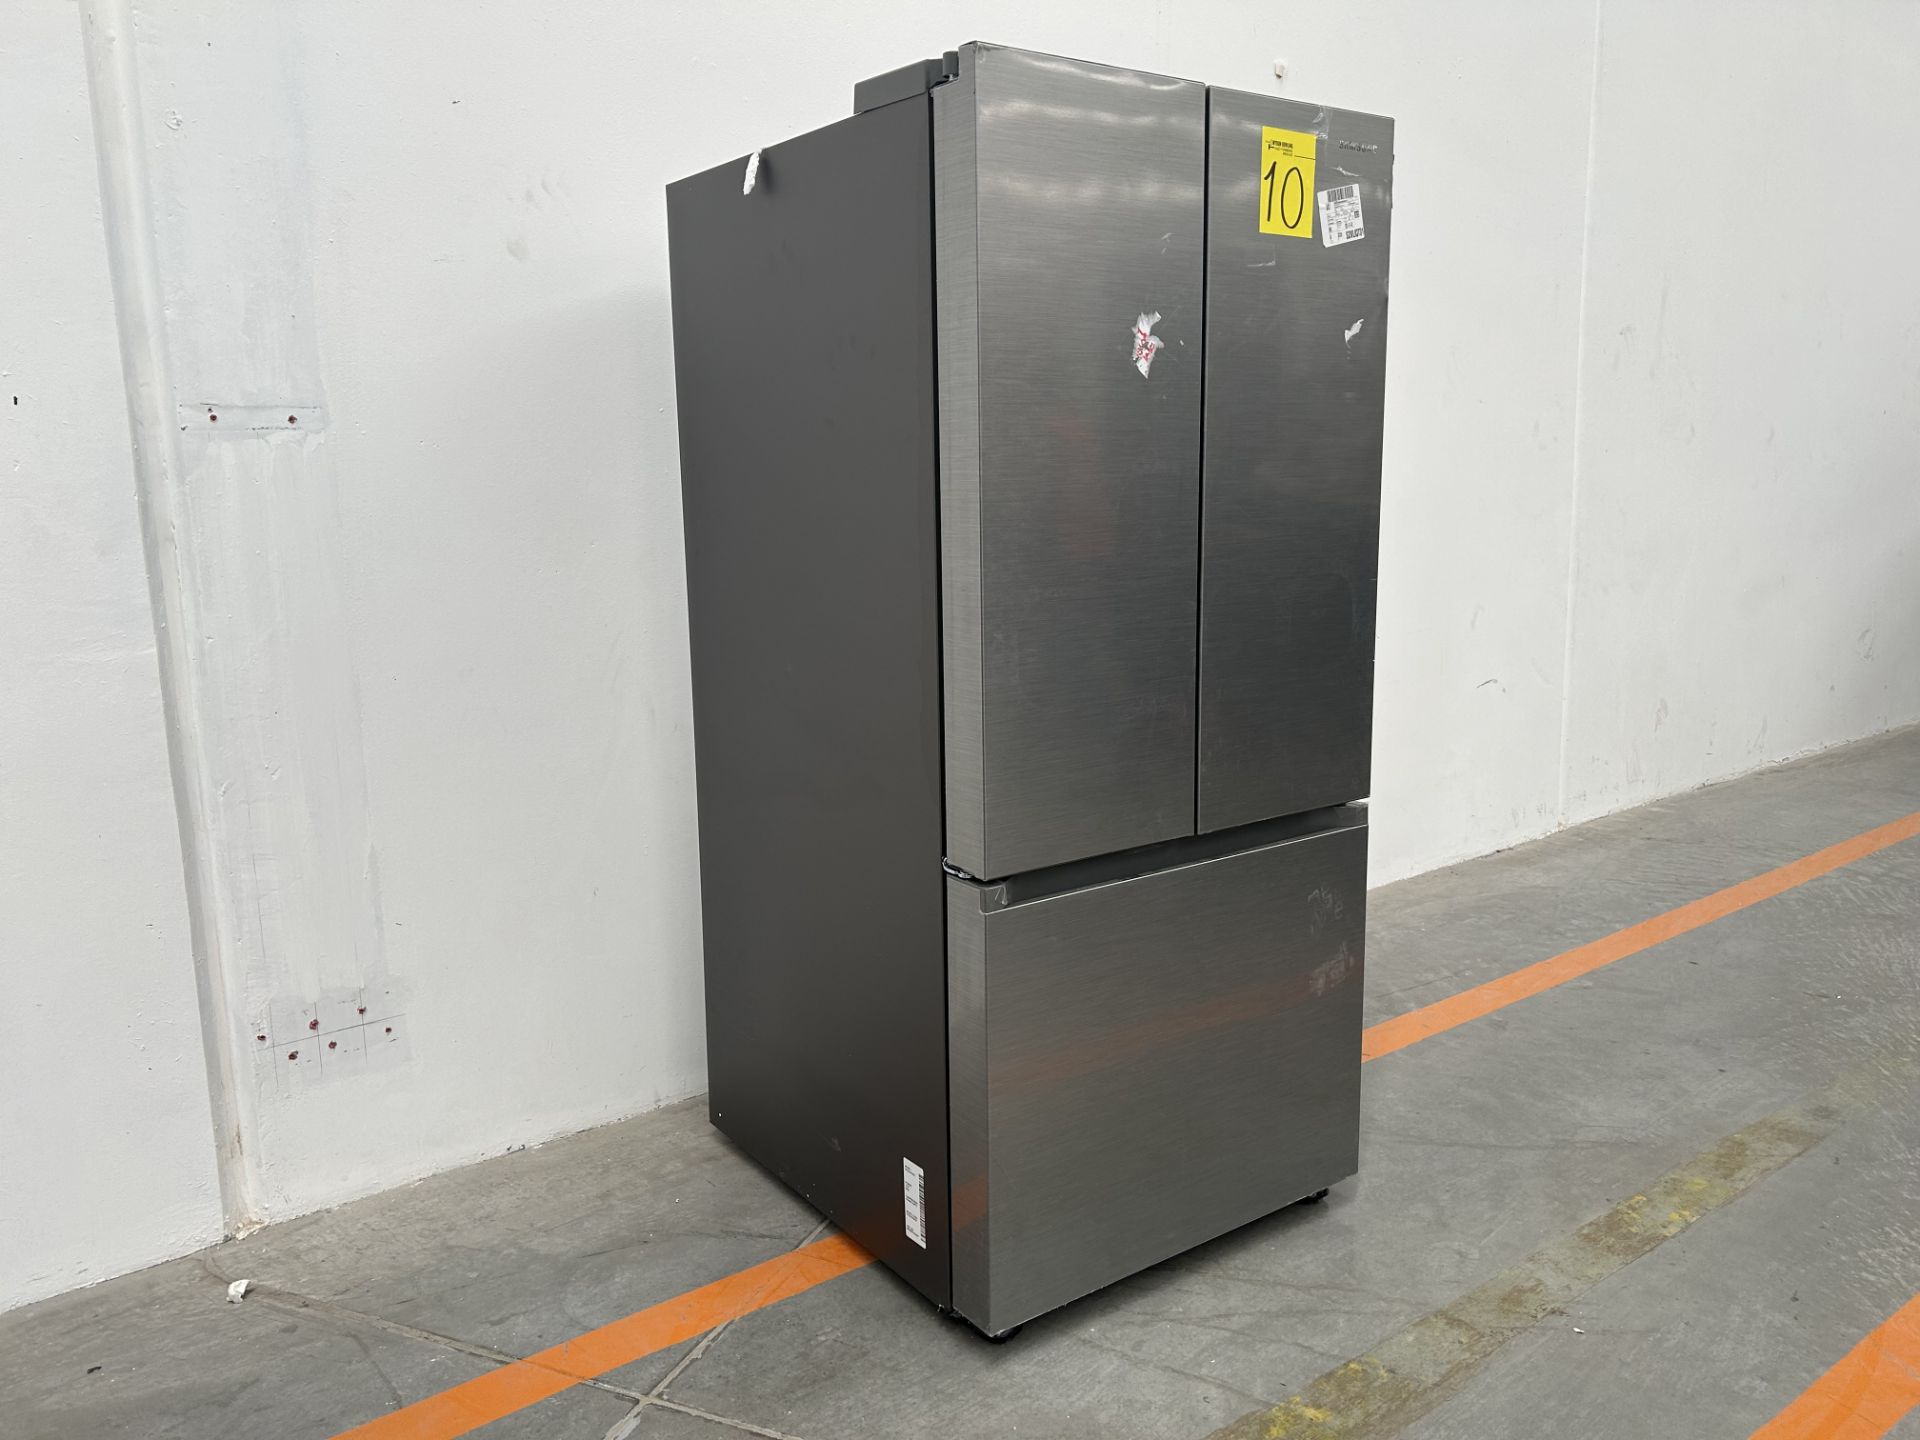 (NUEVO) Refrigerador Marca SAMSUNG, Modelo RF22A4010S9, Serie 1844T, Color GRIS - Image 3 of 4